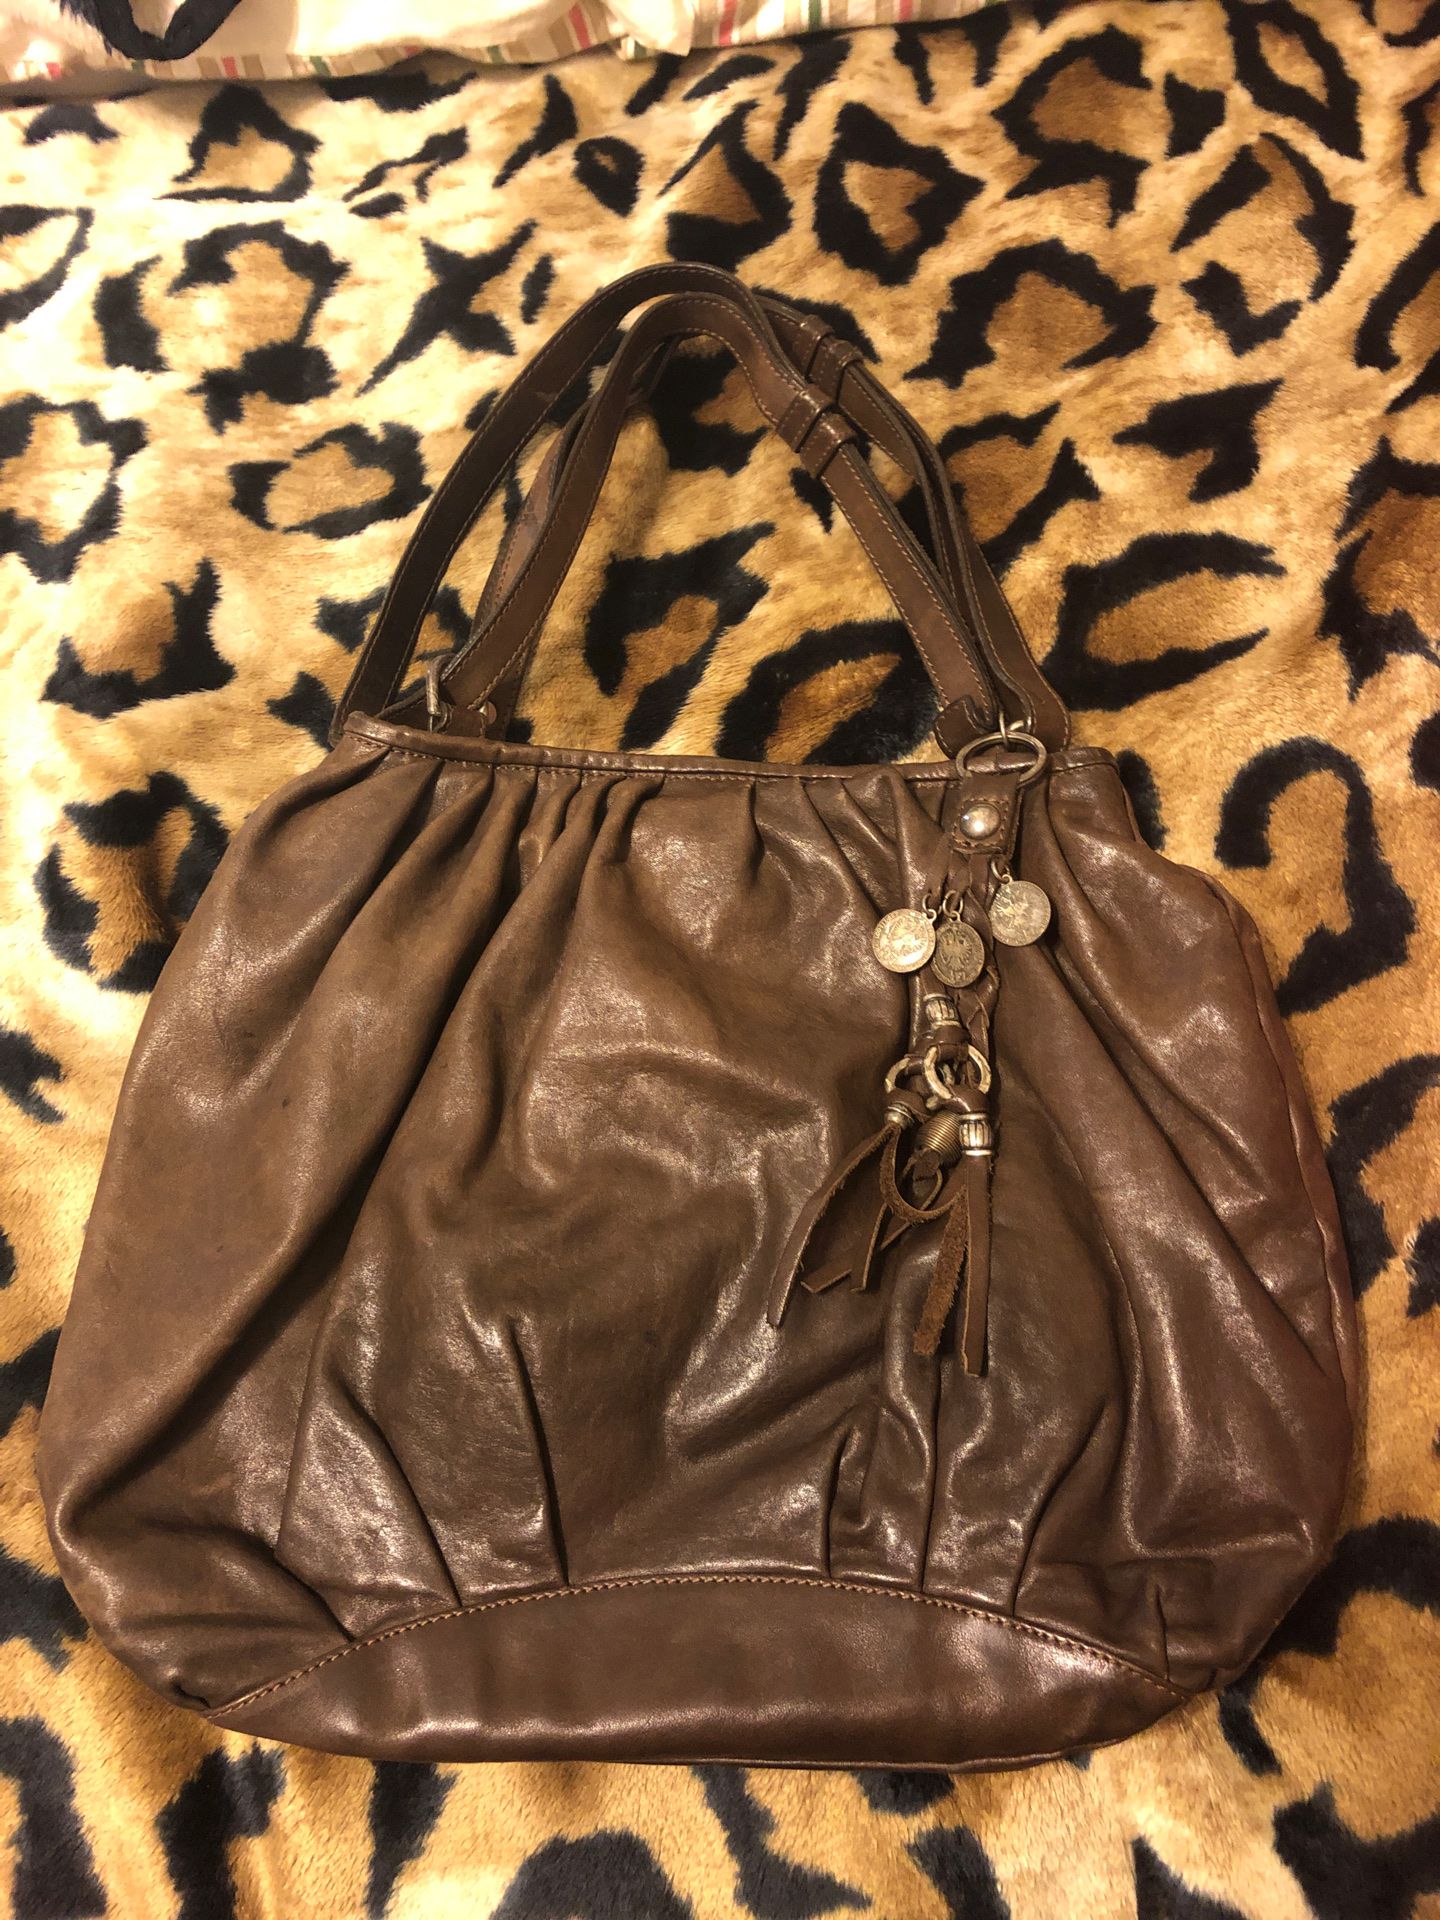 Designer Italian leather hobo handbag with dust bag.